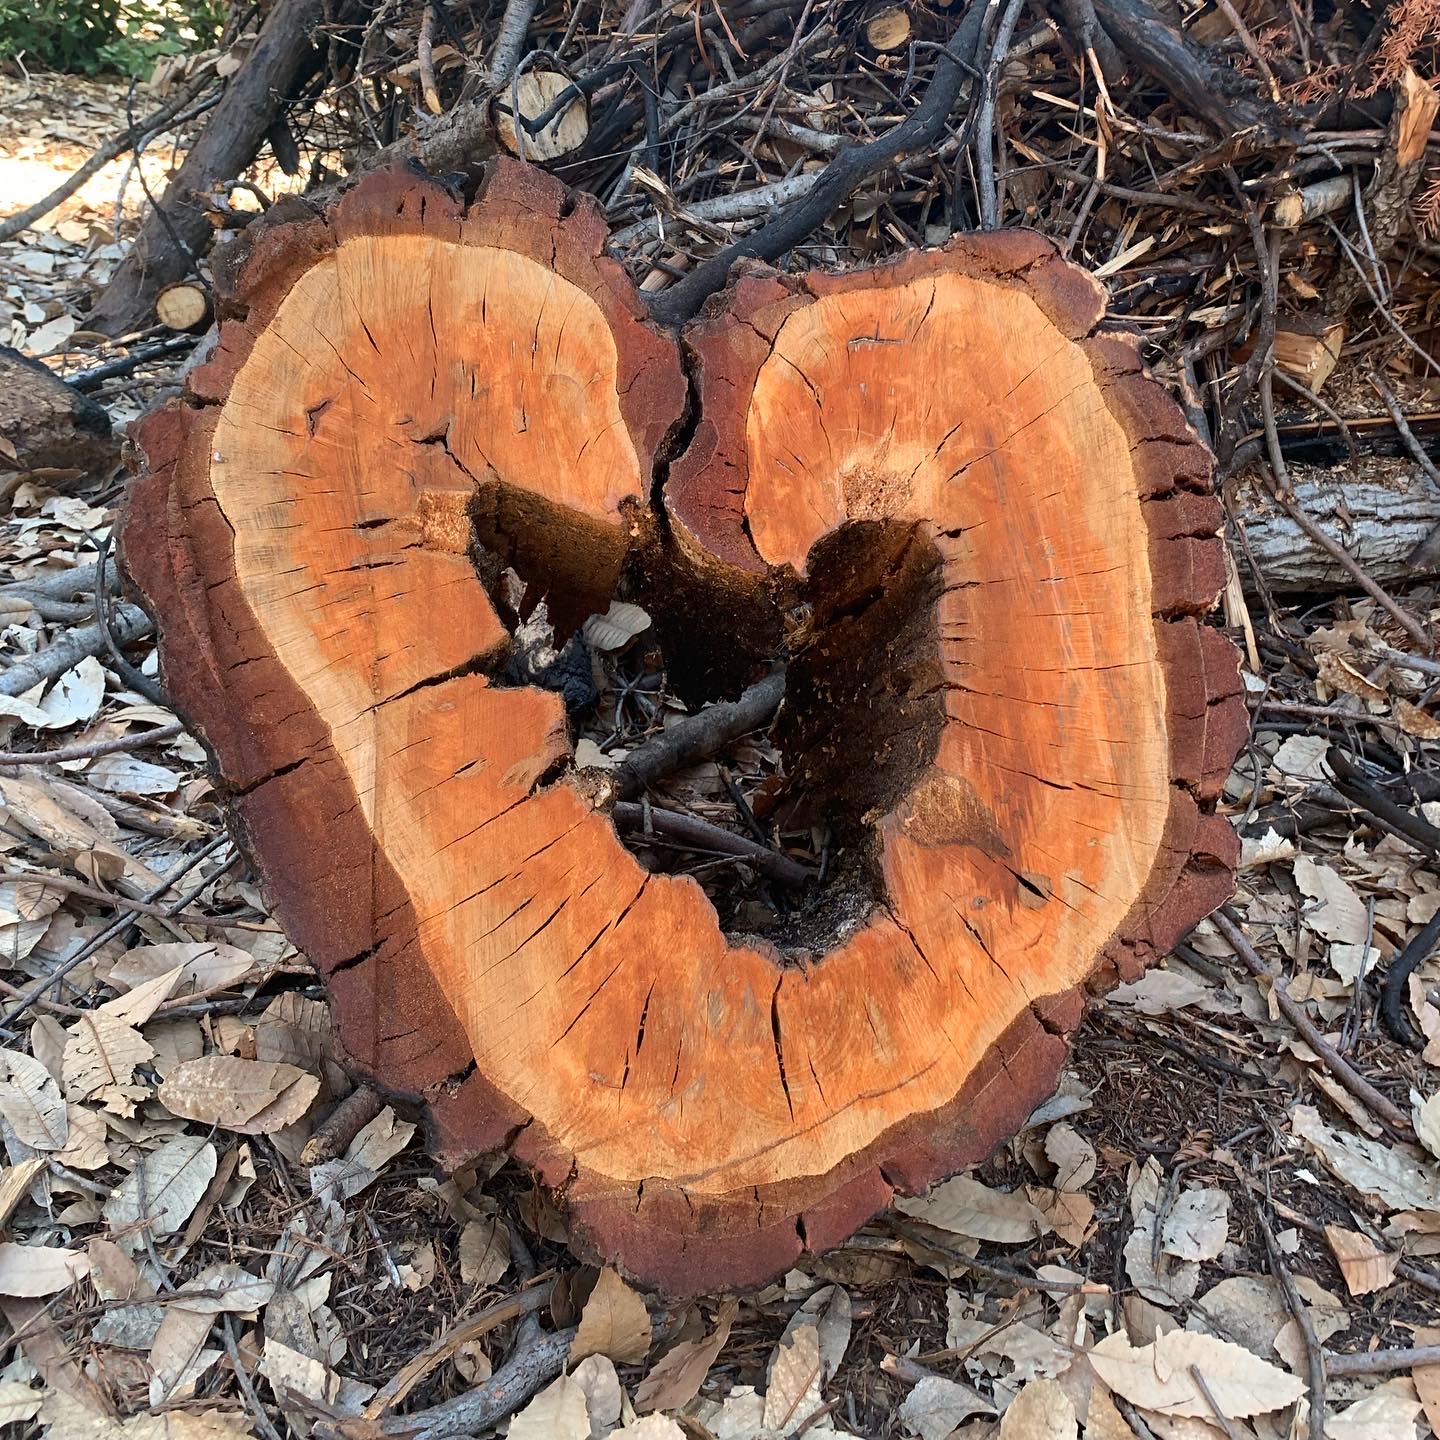 A sliced log in a heart shape